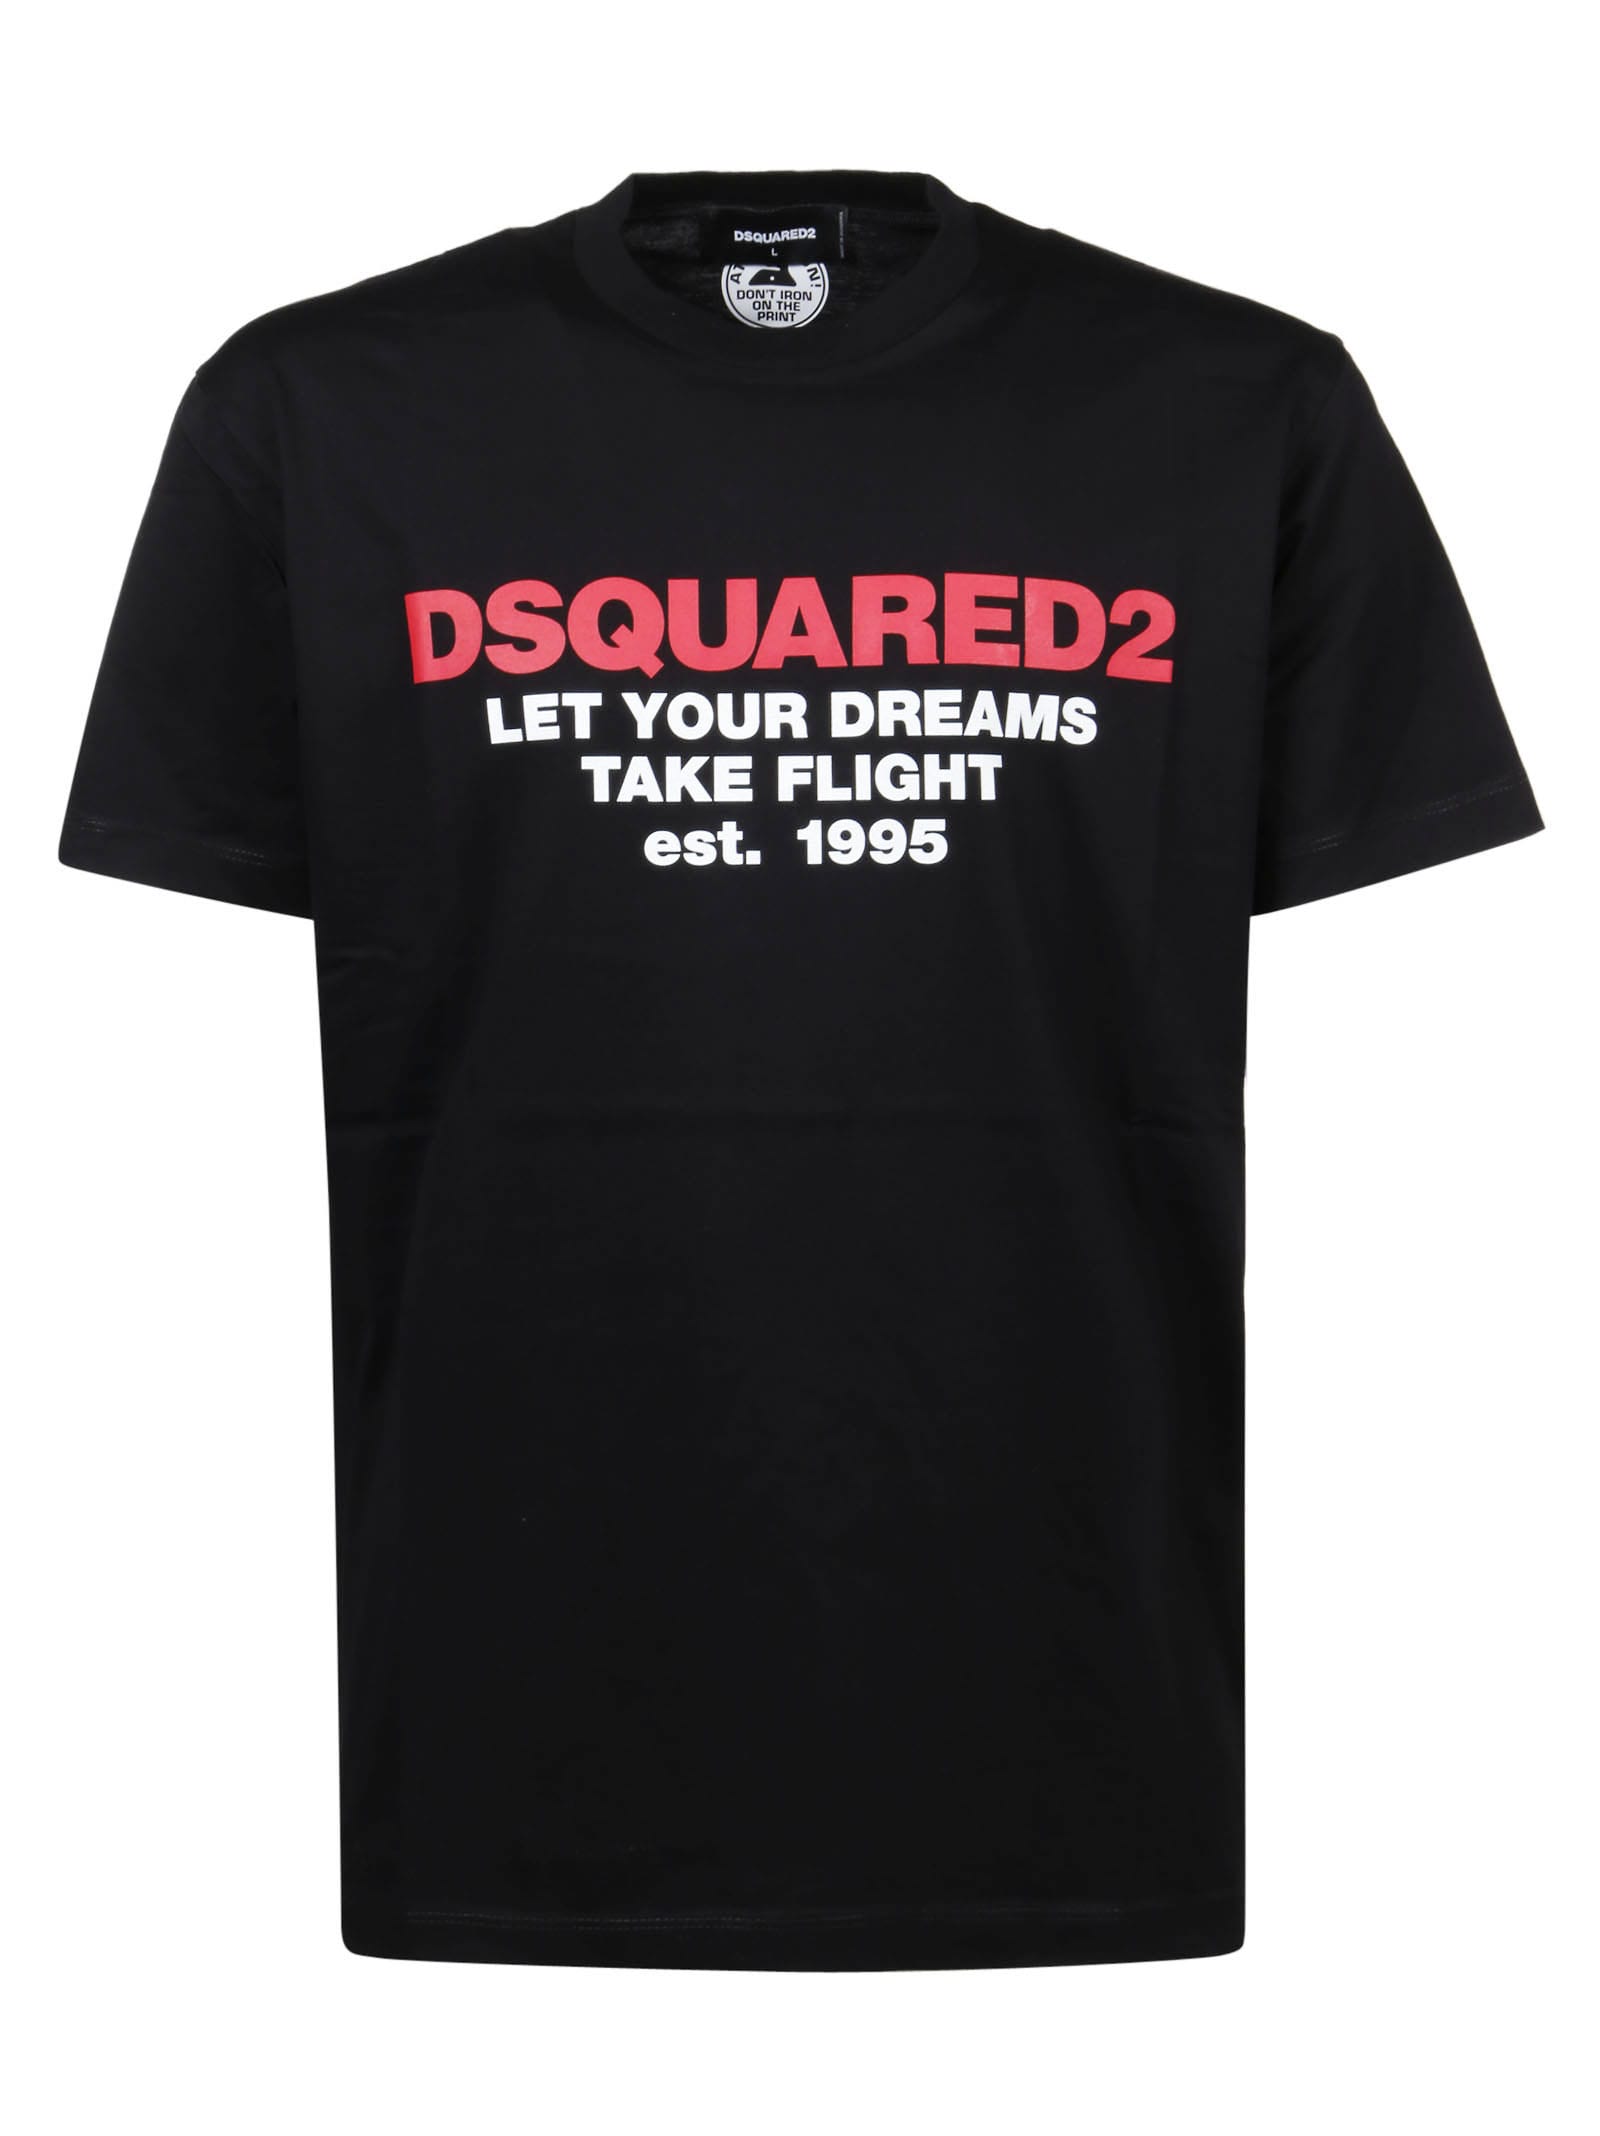 Dsquared2 Dream Flight Cool T-shirt